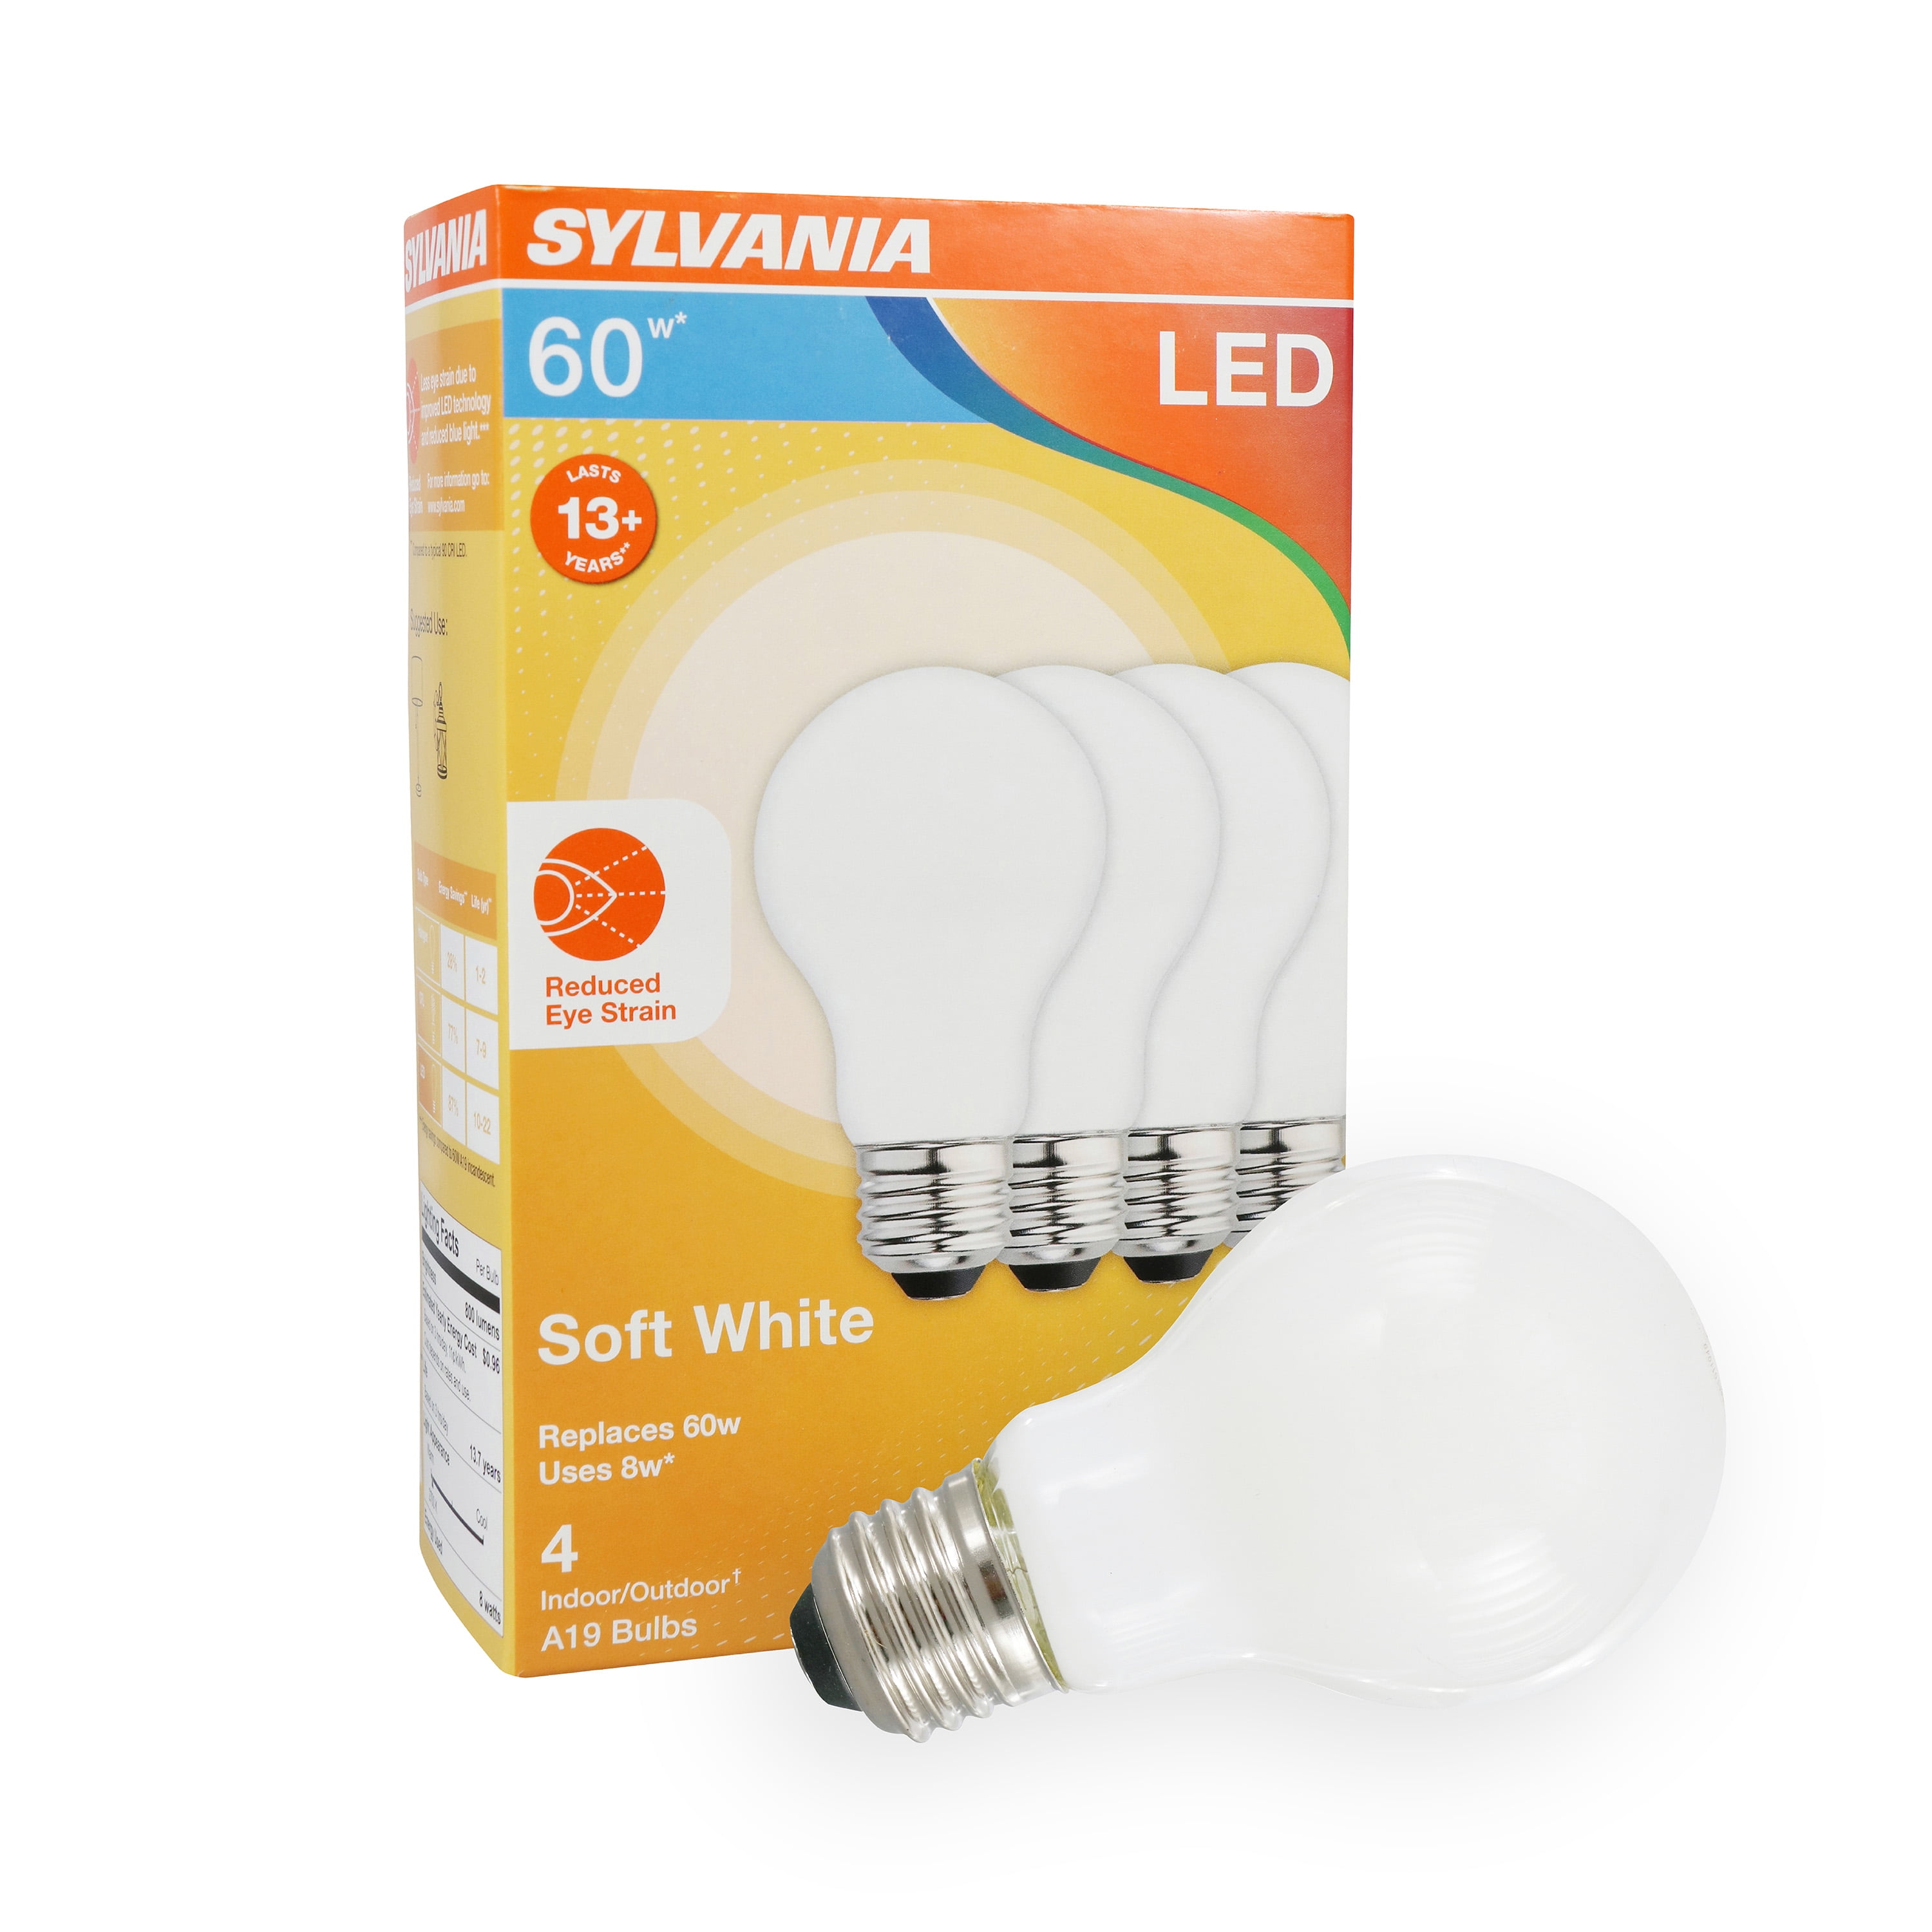 SYLVANIA LED Reduced Eye Light Bulb, A19, 8W, 2700K, Dimmable, Soft White, 4 Pack - Walmart.com